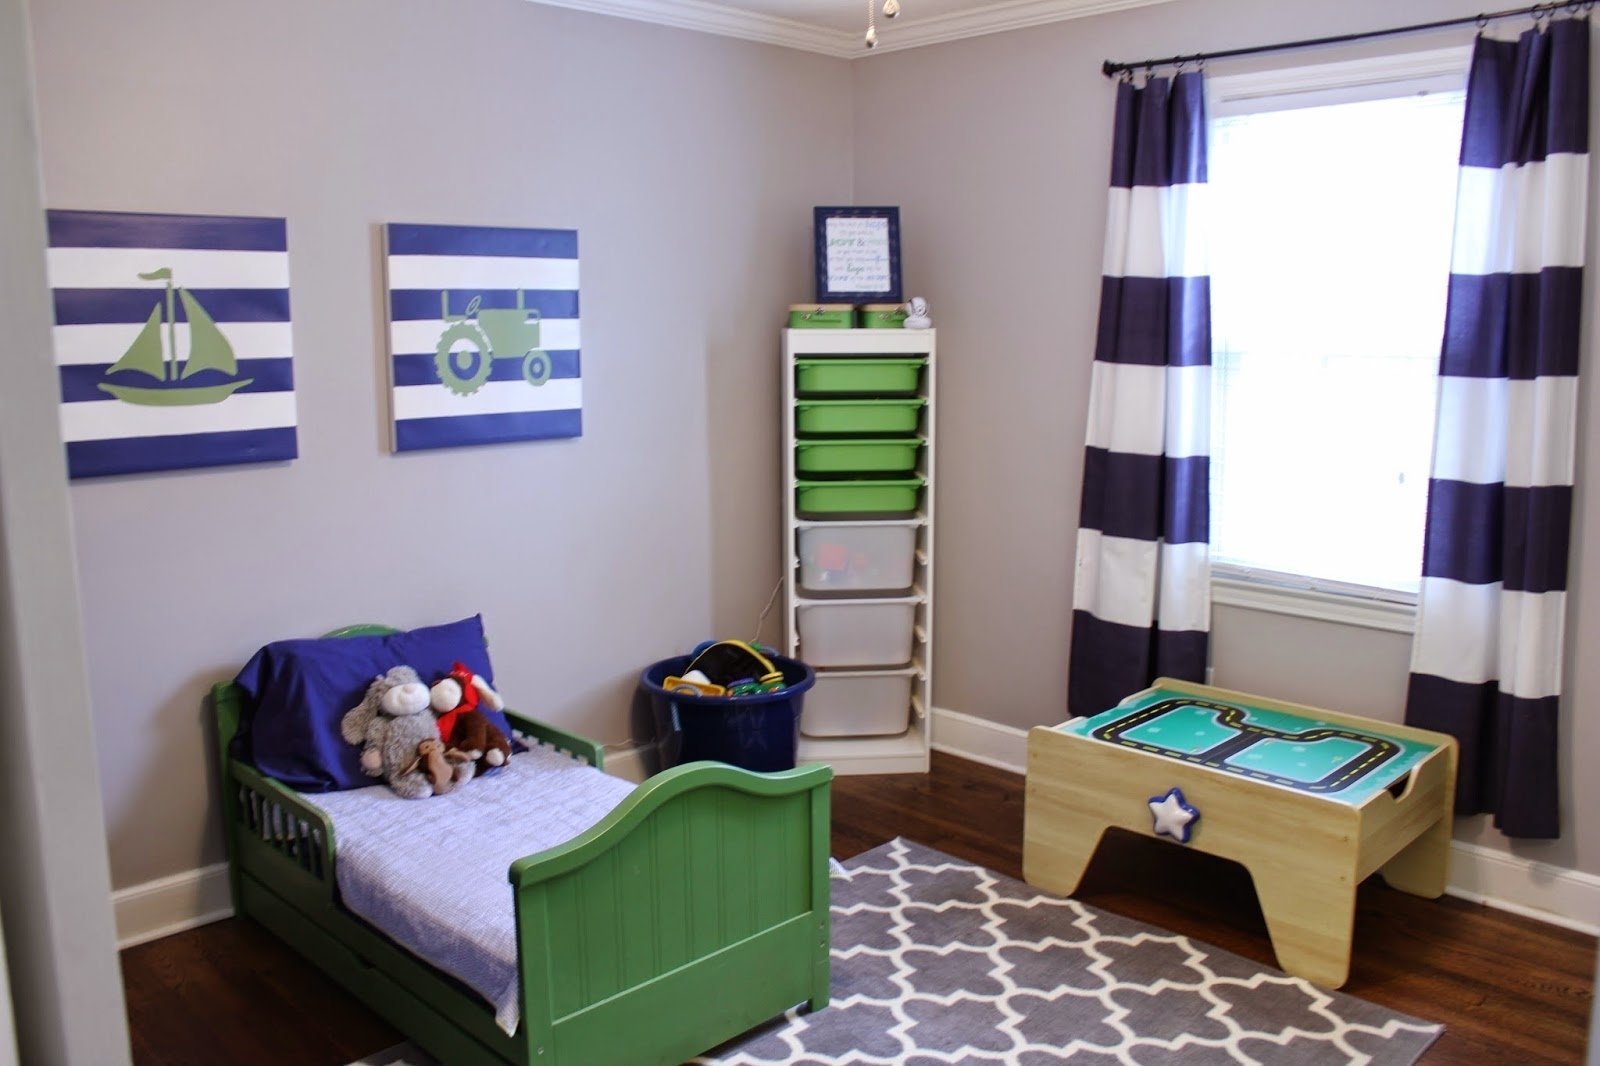 10 Fantastic Toddler Room Ideas For Boys toddler room ideas for boy finding the perfect room decoration 2022